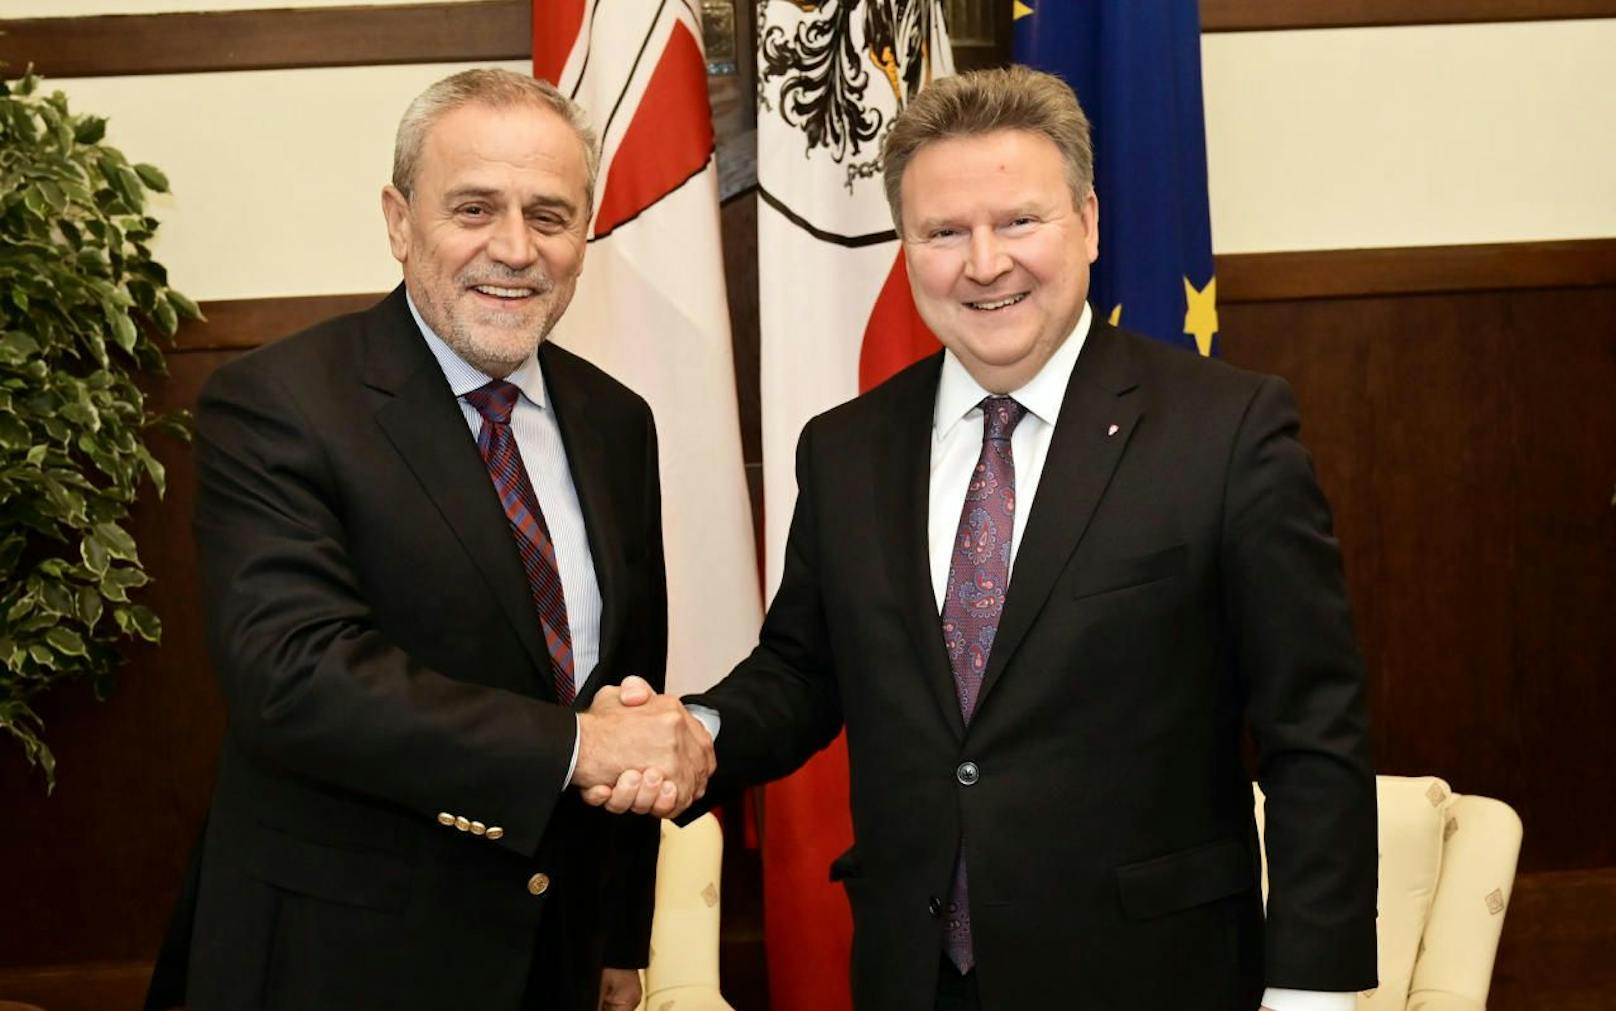 Bürgermeister Michael Ludwig hat Zagrebs Stadtoberhaupt Milan Bandic seine Hilfe zugesagt.